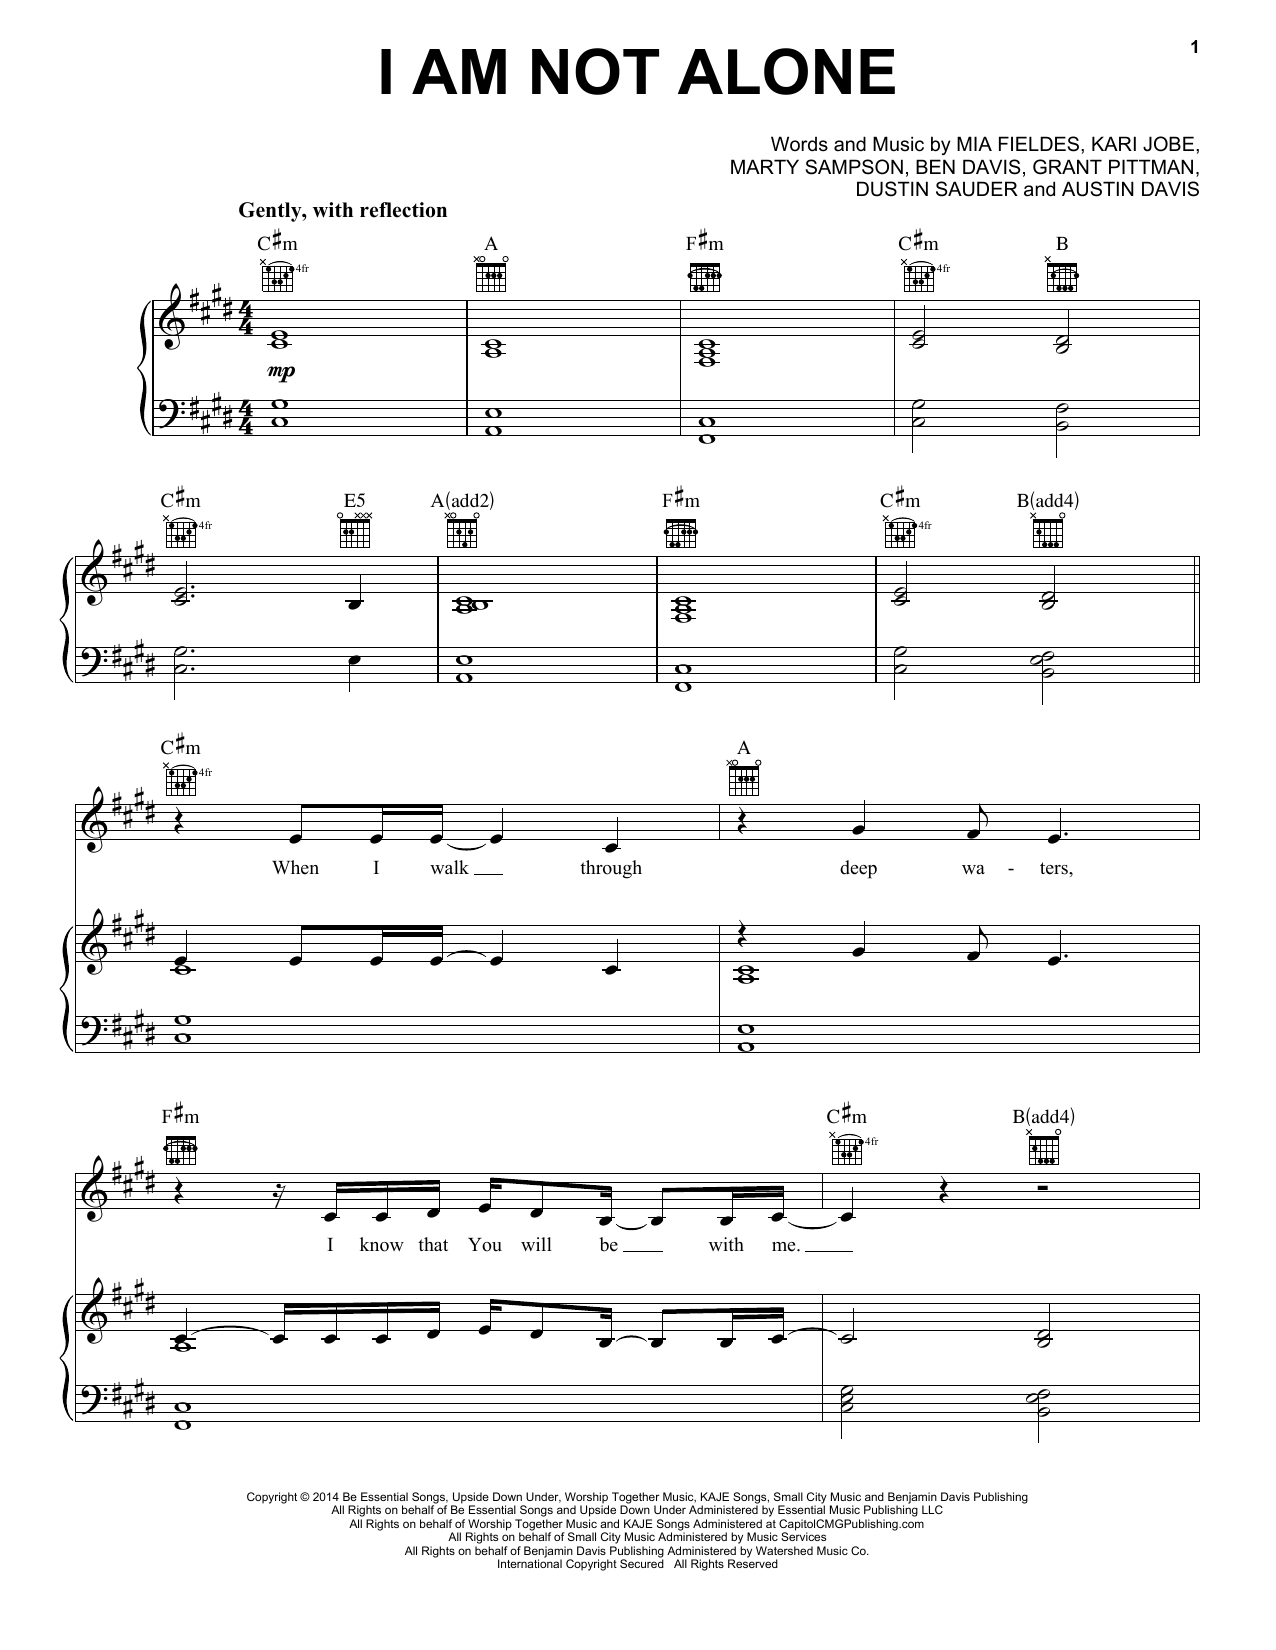 Kari Jobe I Am Not Alone Sheet Music Notes & Chords for Piano, Vocal & Guitar (Right-Hand Melody) - Download or Print PDF